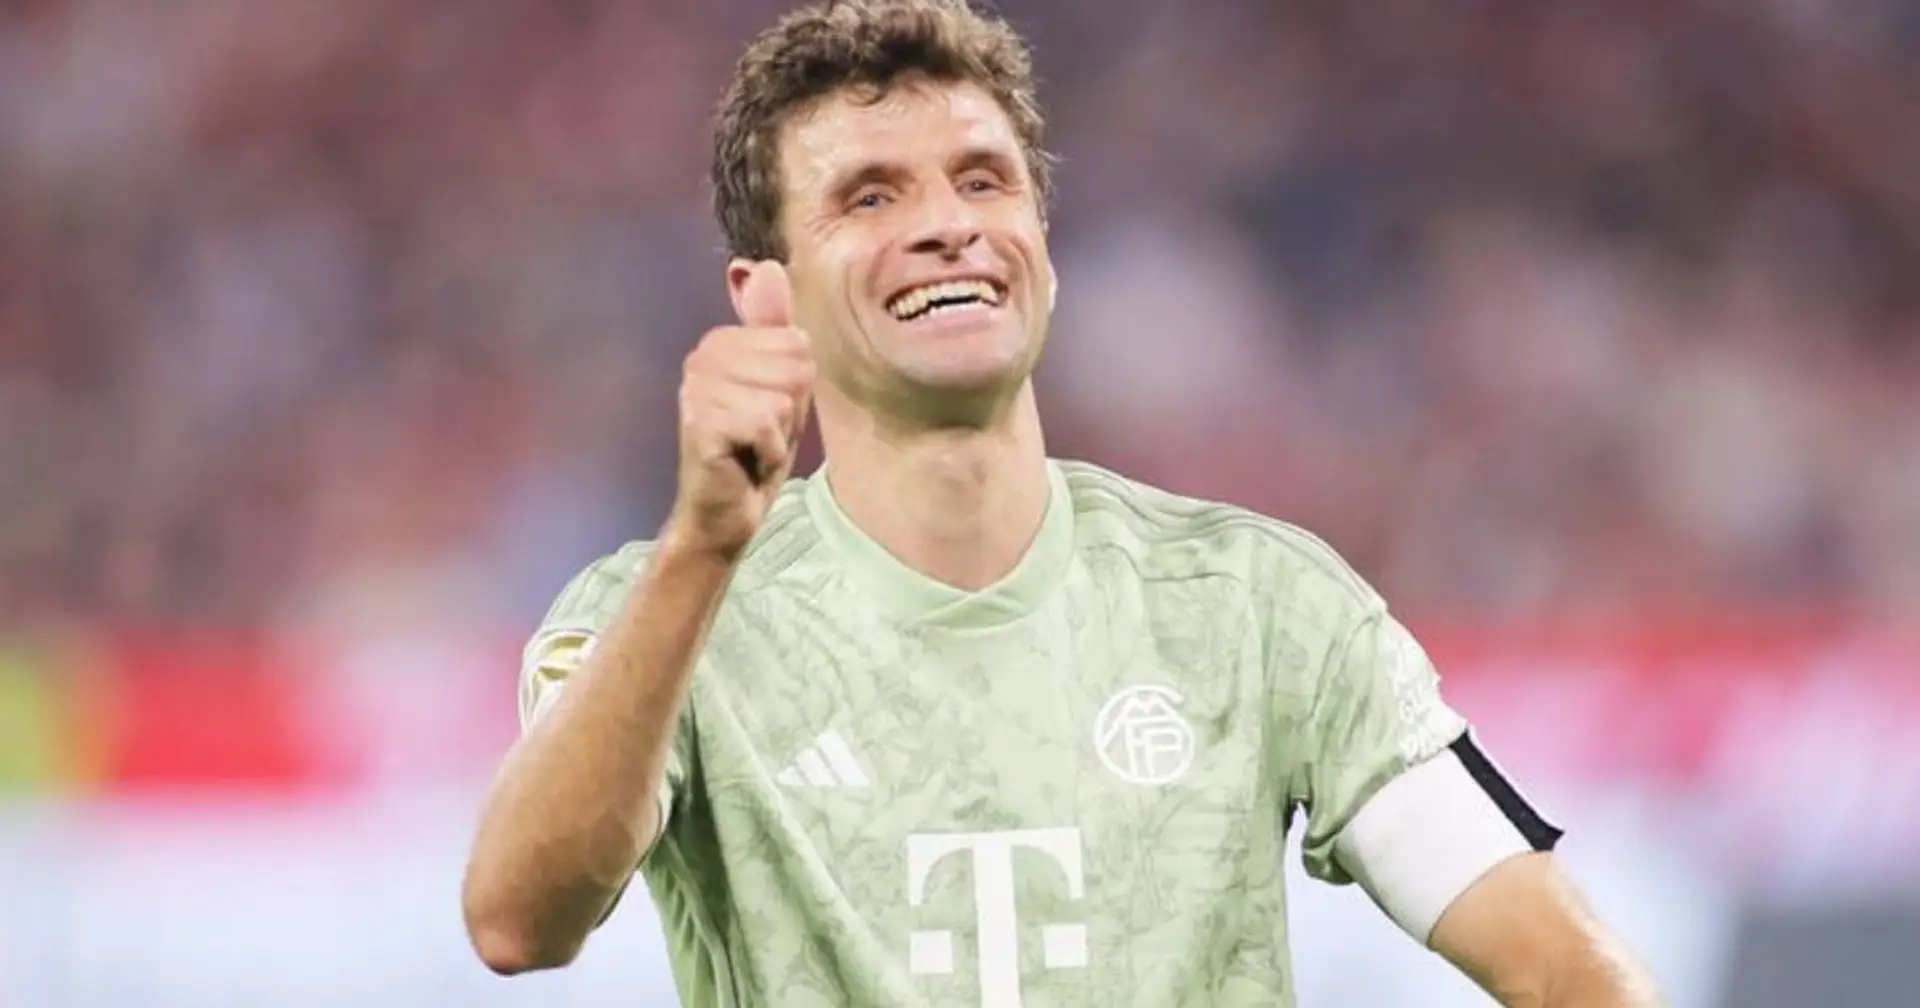 Interesse an Müller wächst - Bayern plant nun Vertragsgespräche in den kommenden Wochen - Bericht